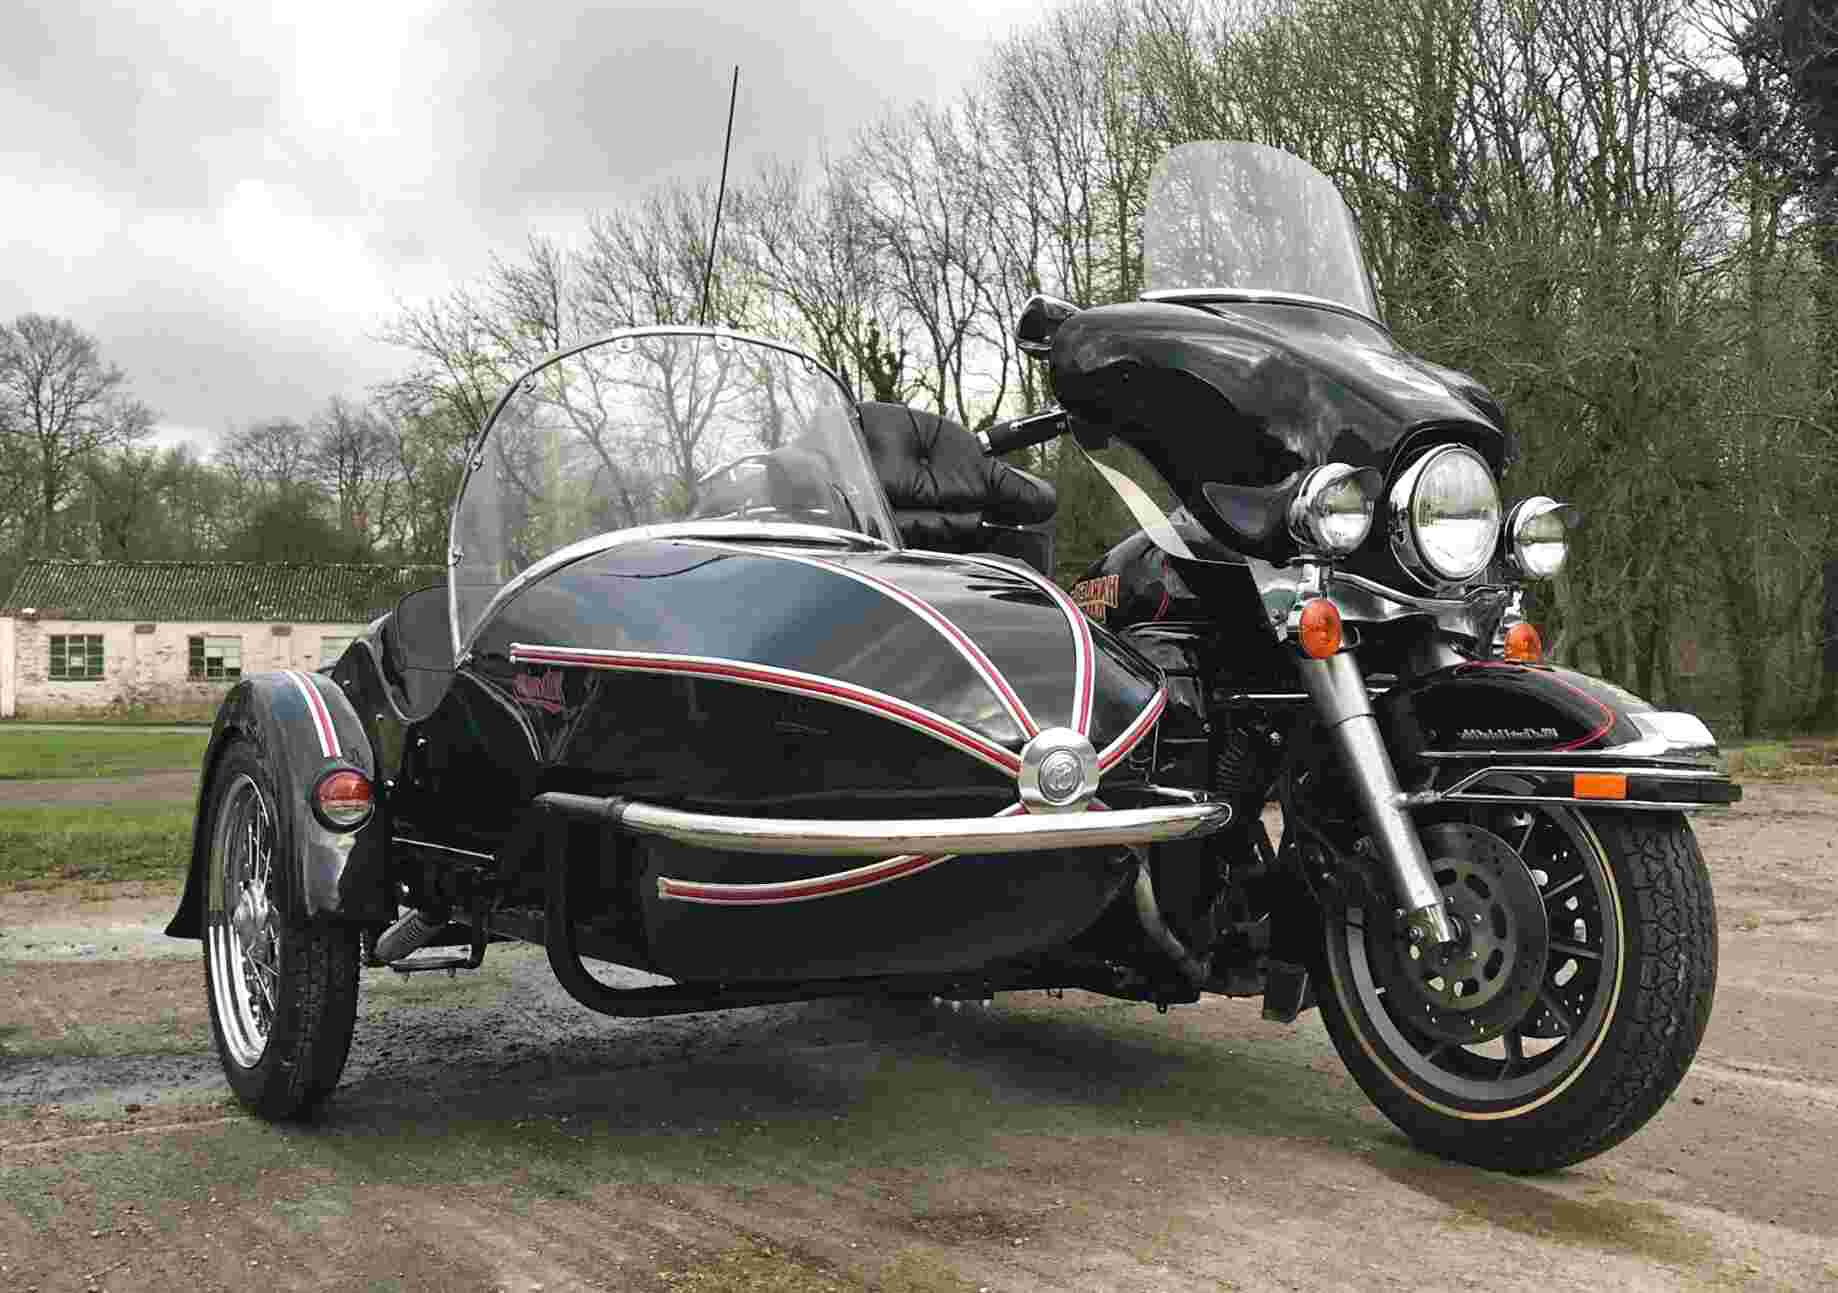 Harley Davidson Motorcycle Sidecar for sale in UK | 78 used Harley ...